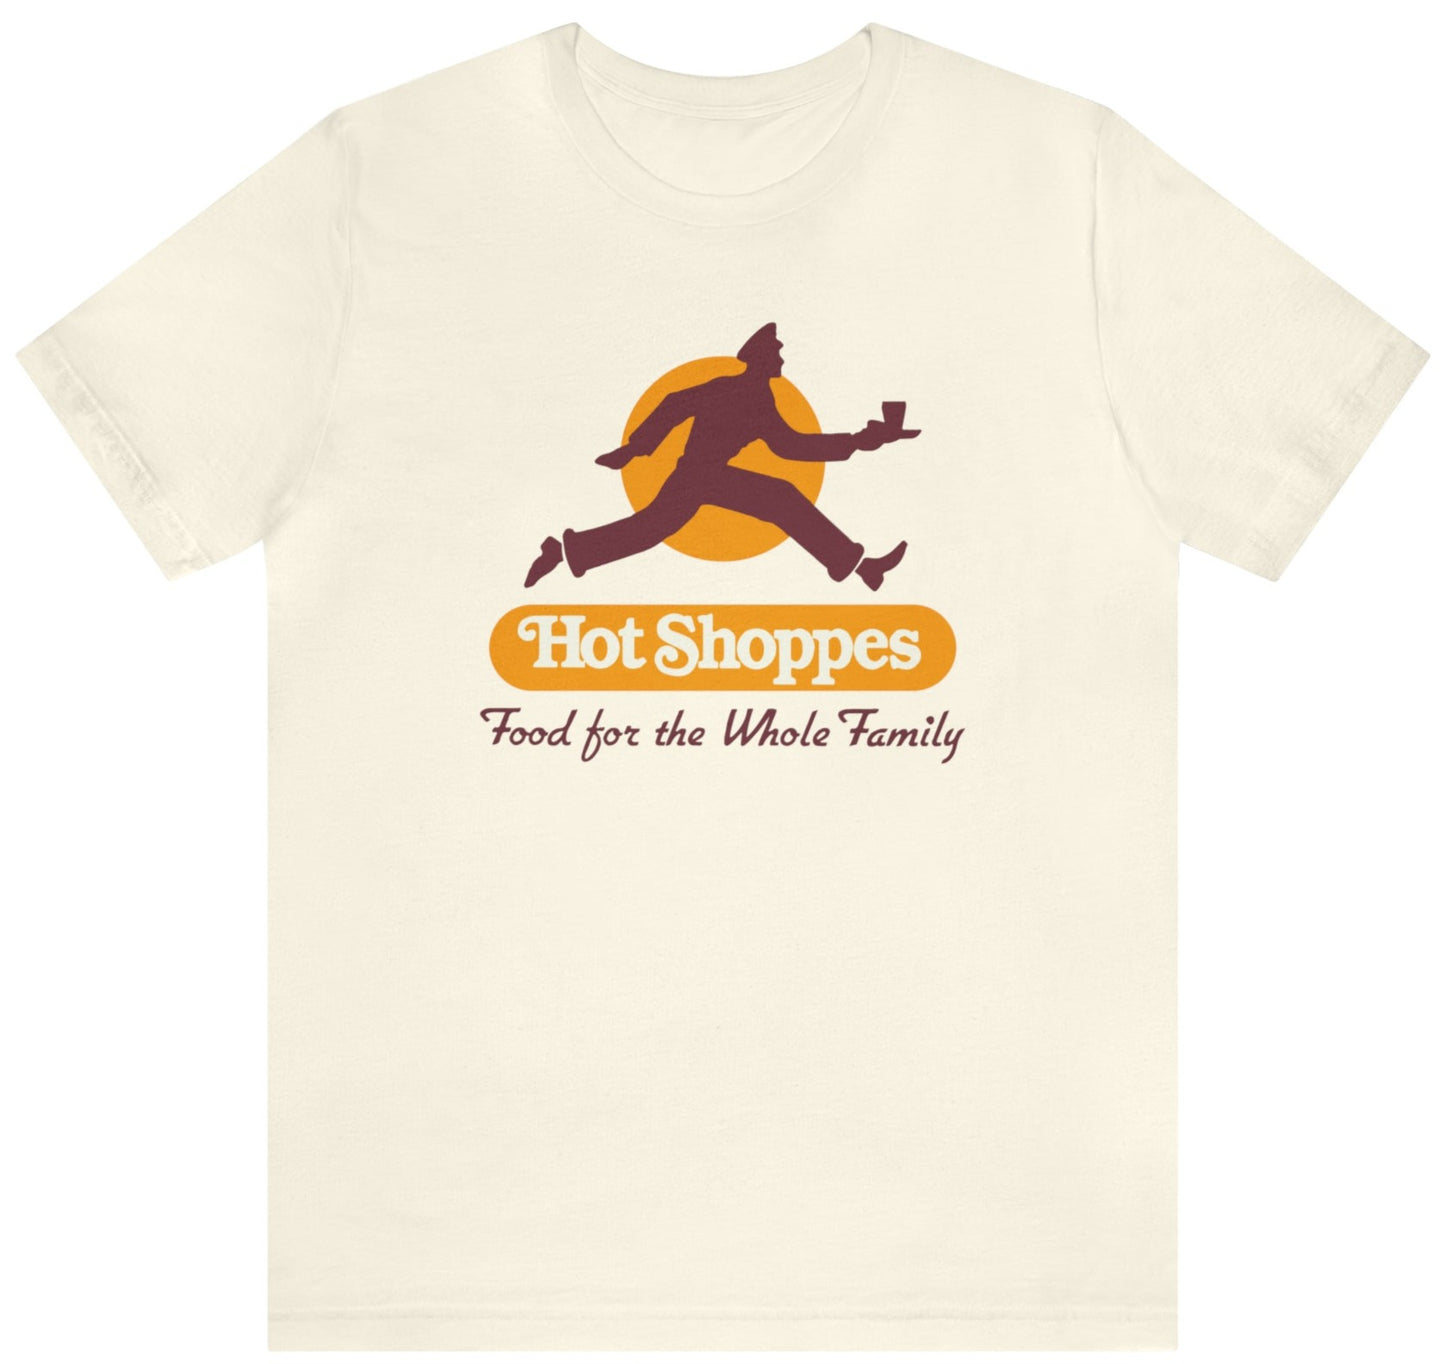 Hot Shoppes t-shirt